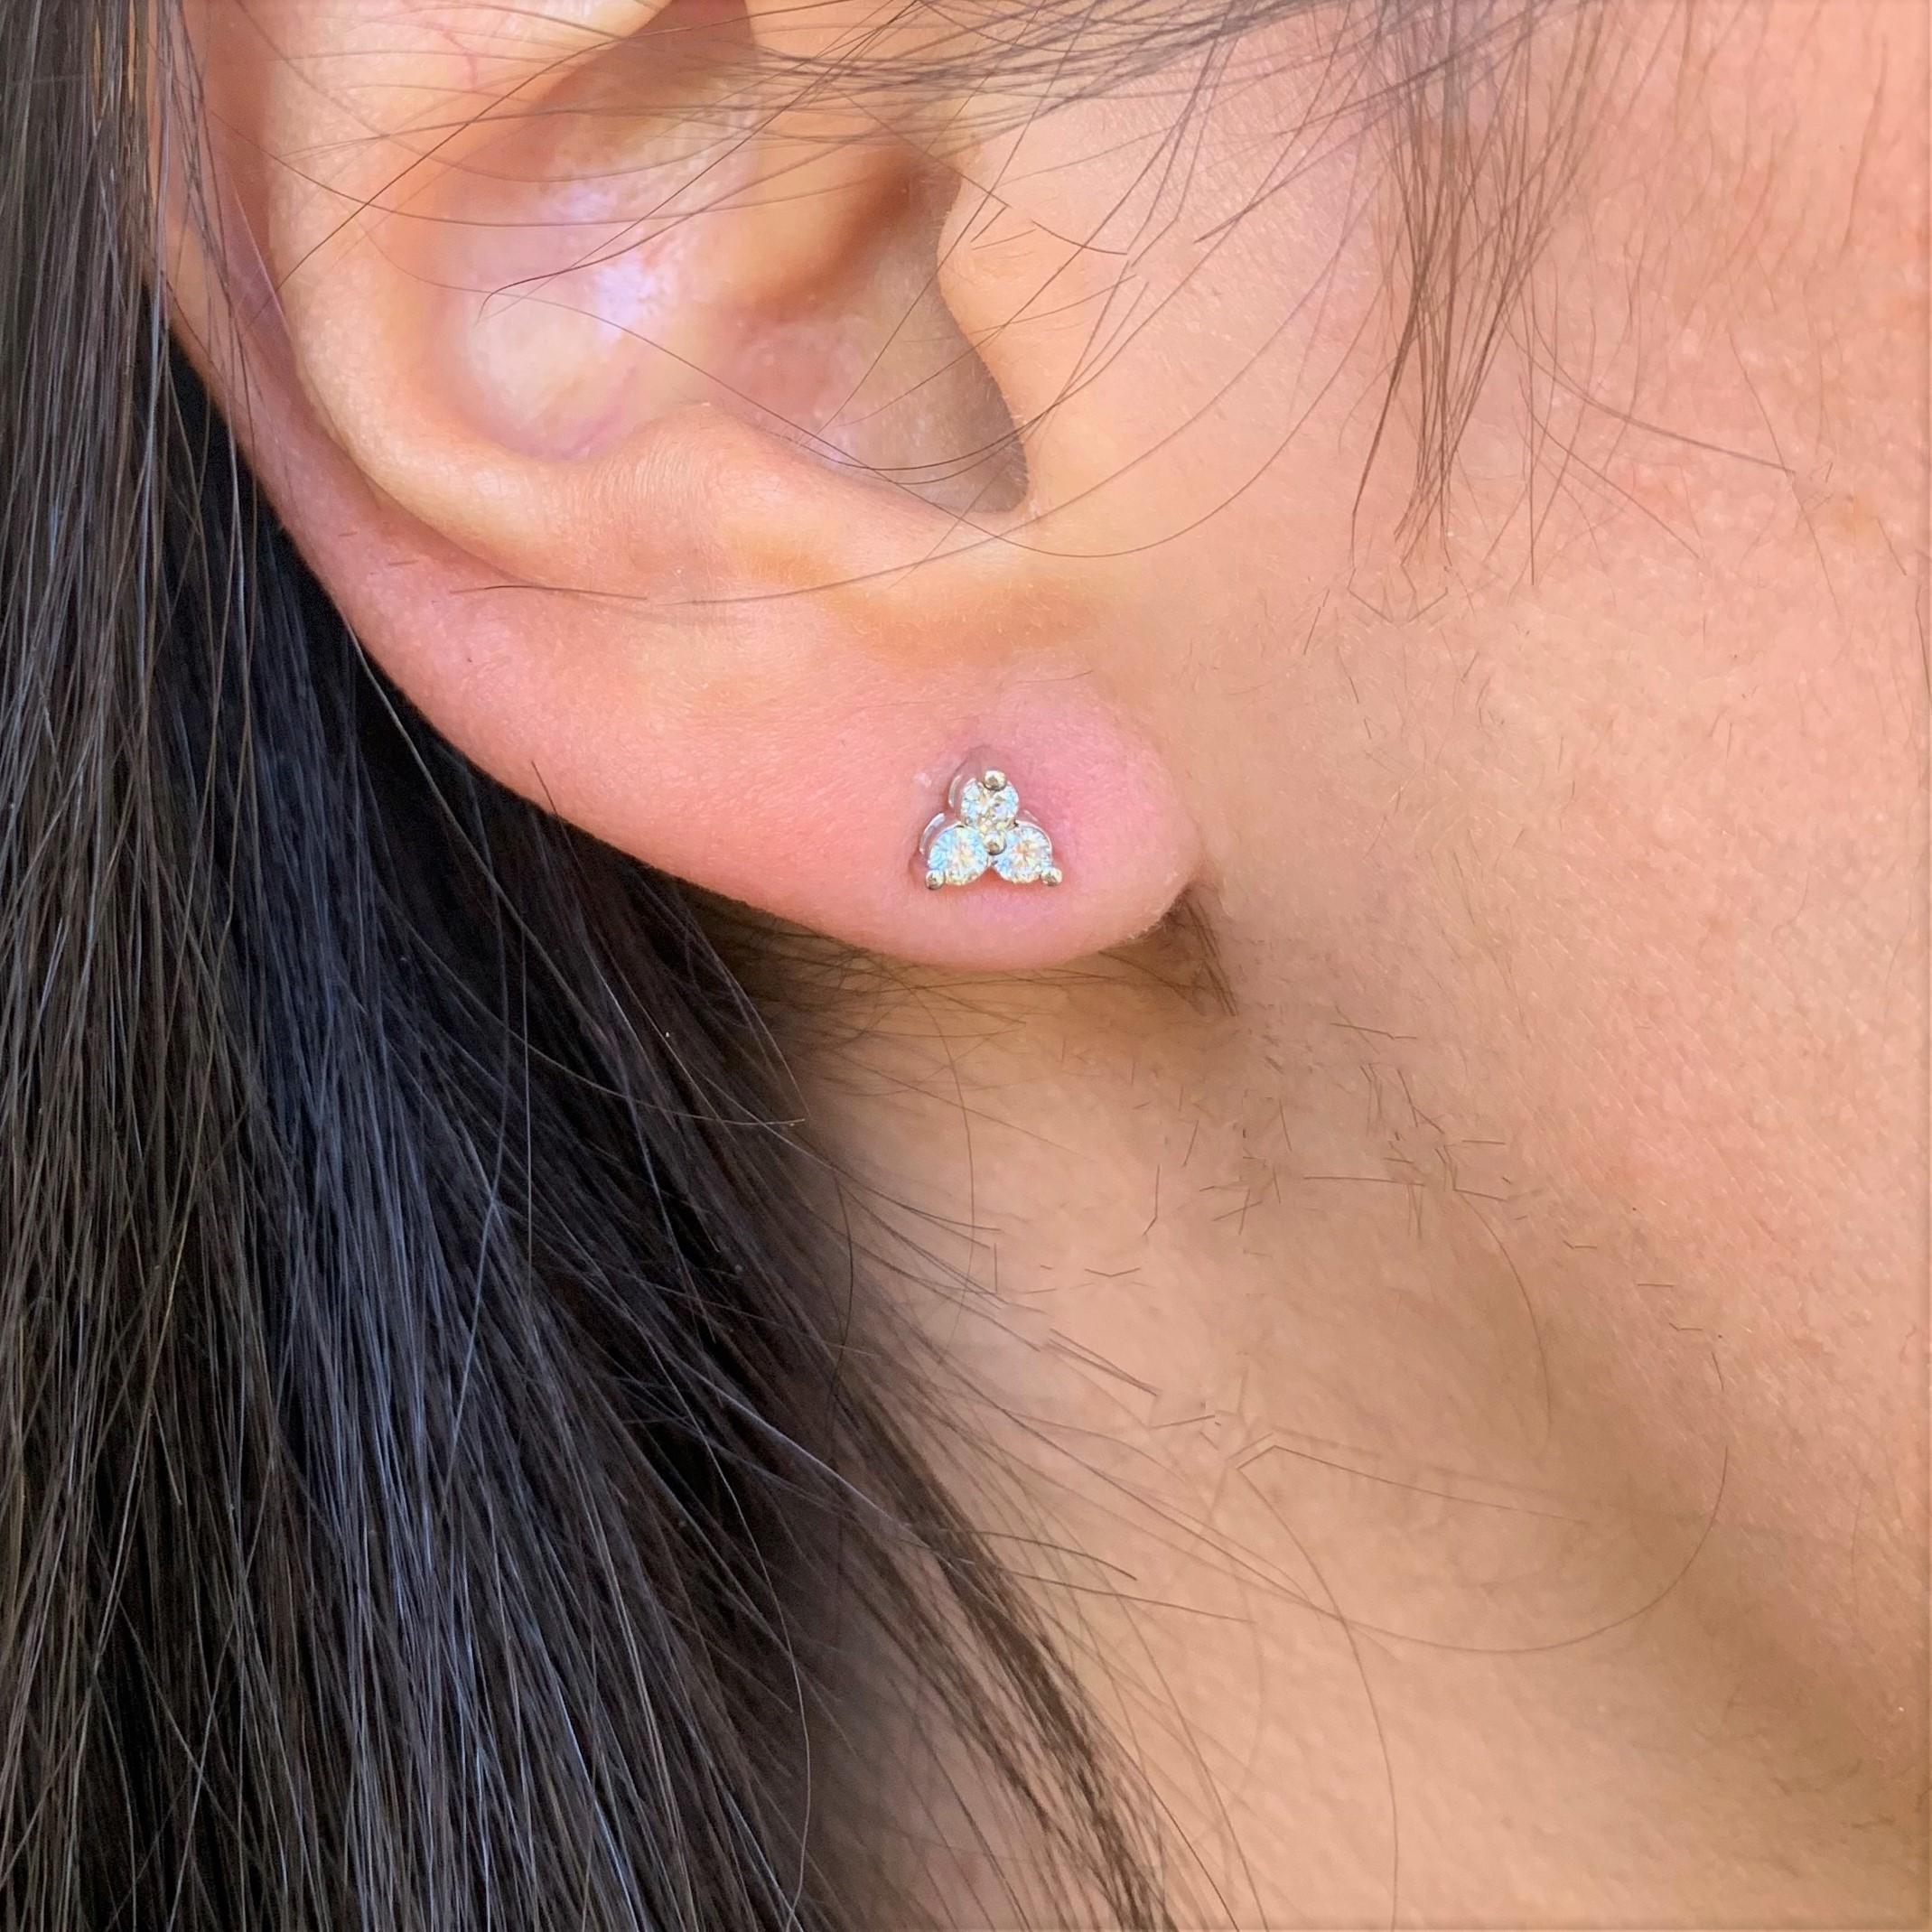 3rd stud earrings